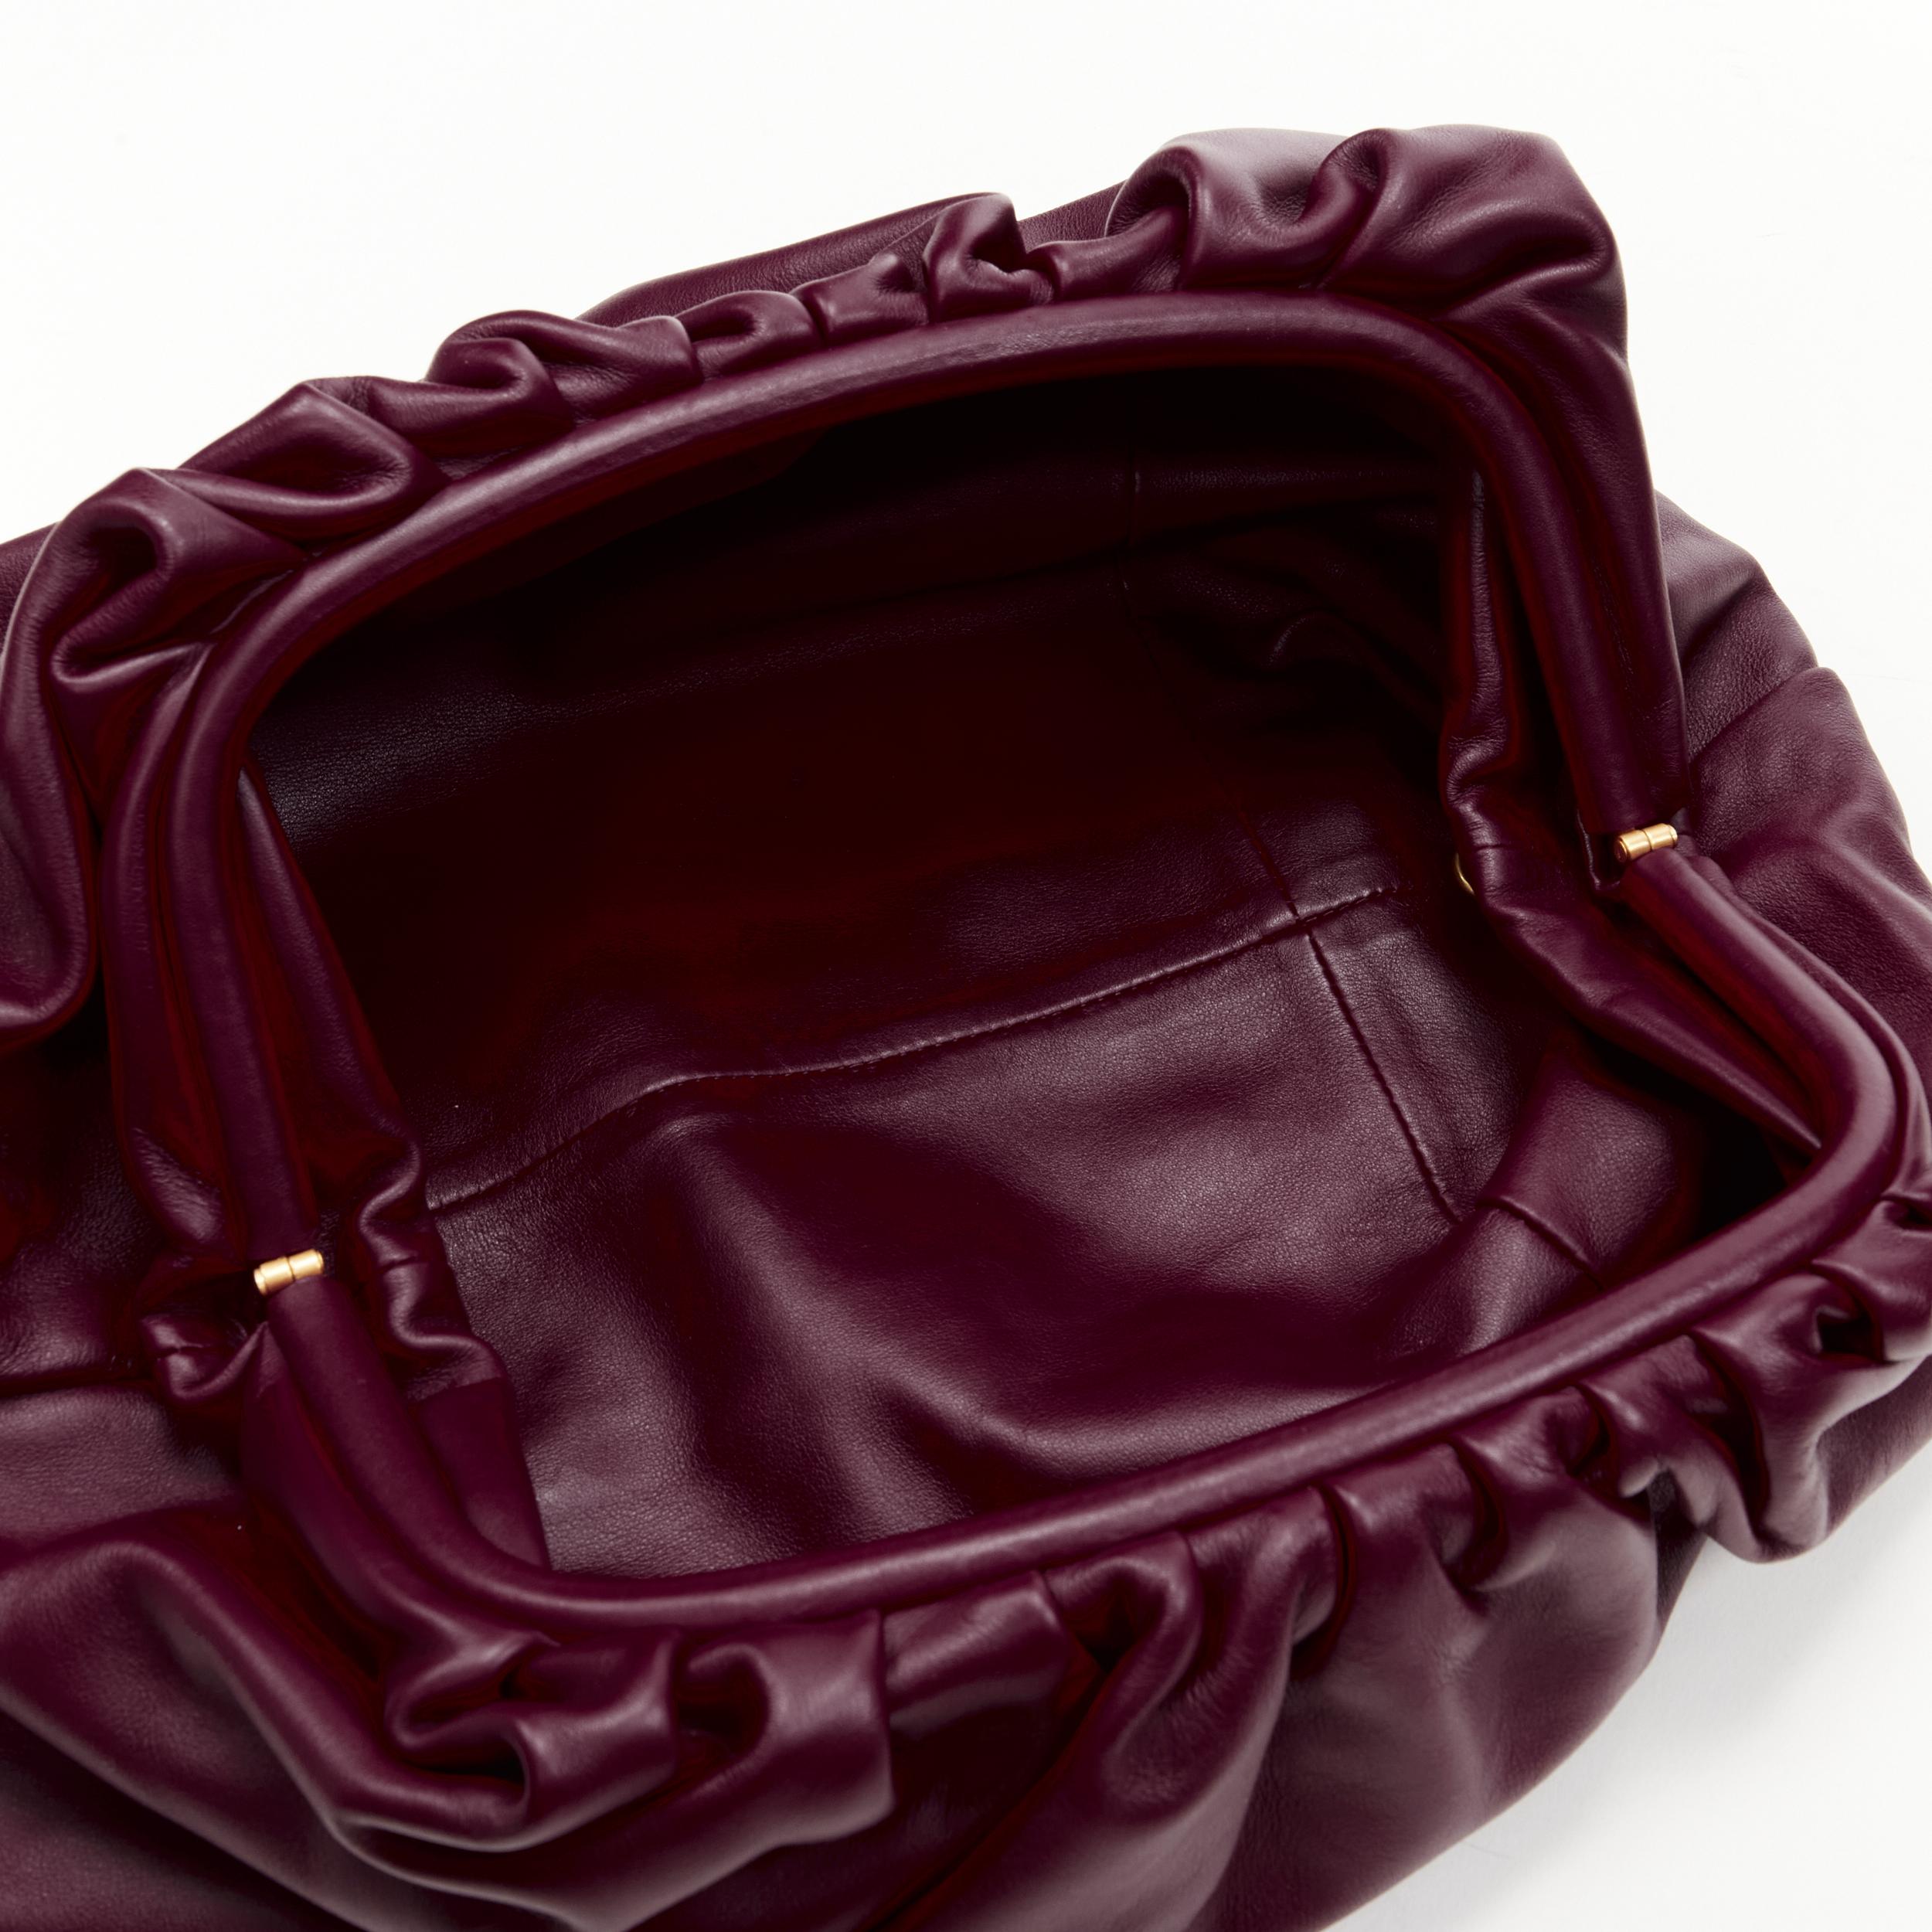 BOTTEGA VENETA The Pouch burgundy red soft lambskin leather clutch bag For Sale 2